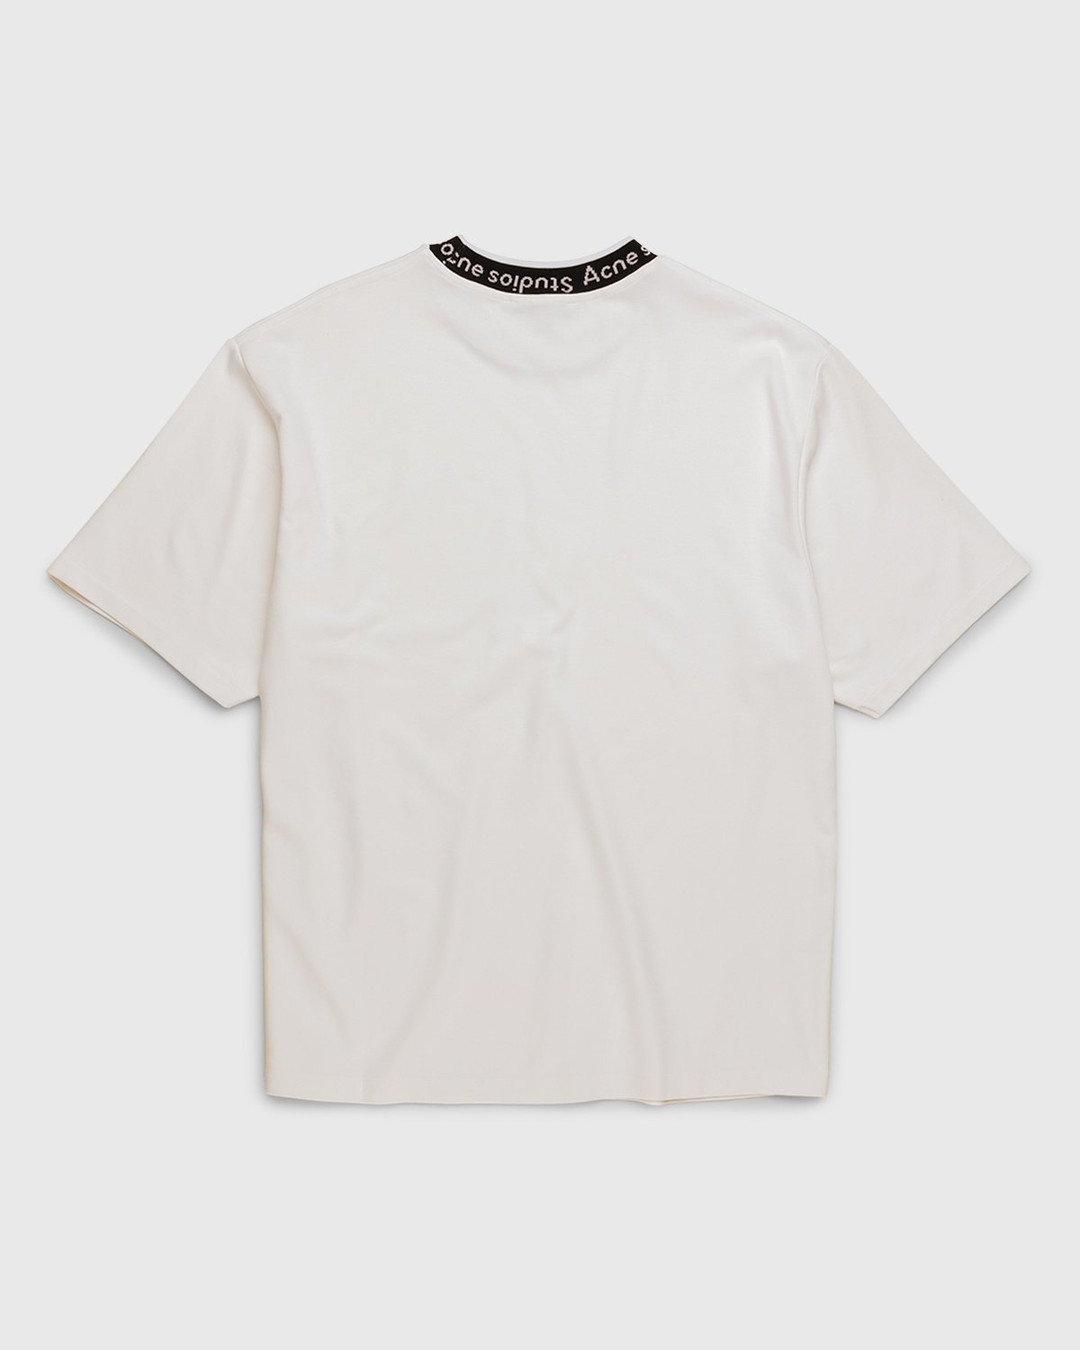 Acne Studios – Logo T-Shirt White - T-Shirts - White - Image 2